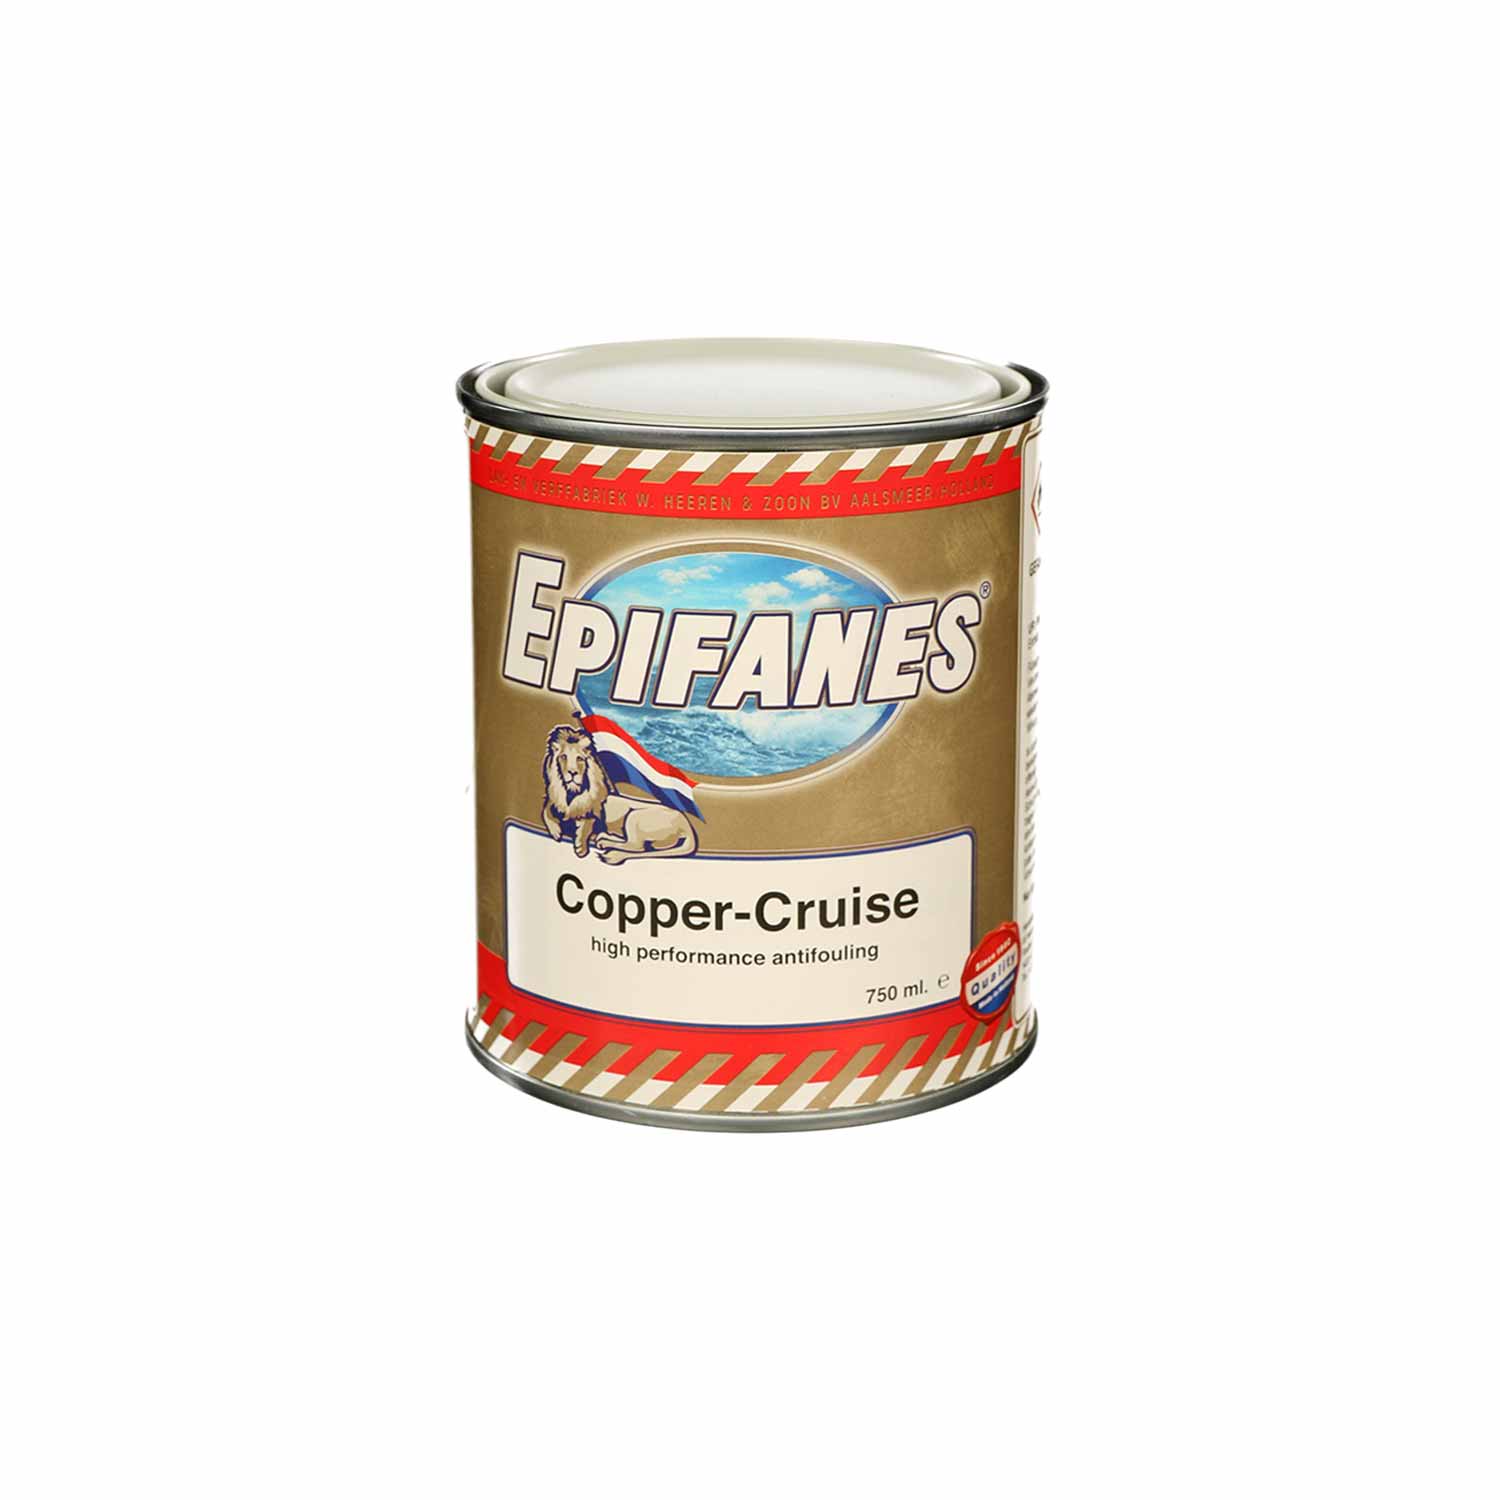 Epifanes Copper Cruise Antifouling E6-44A, 750 ml